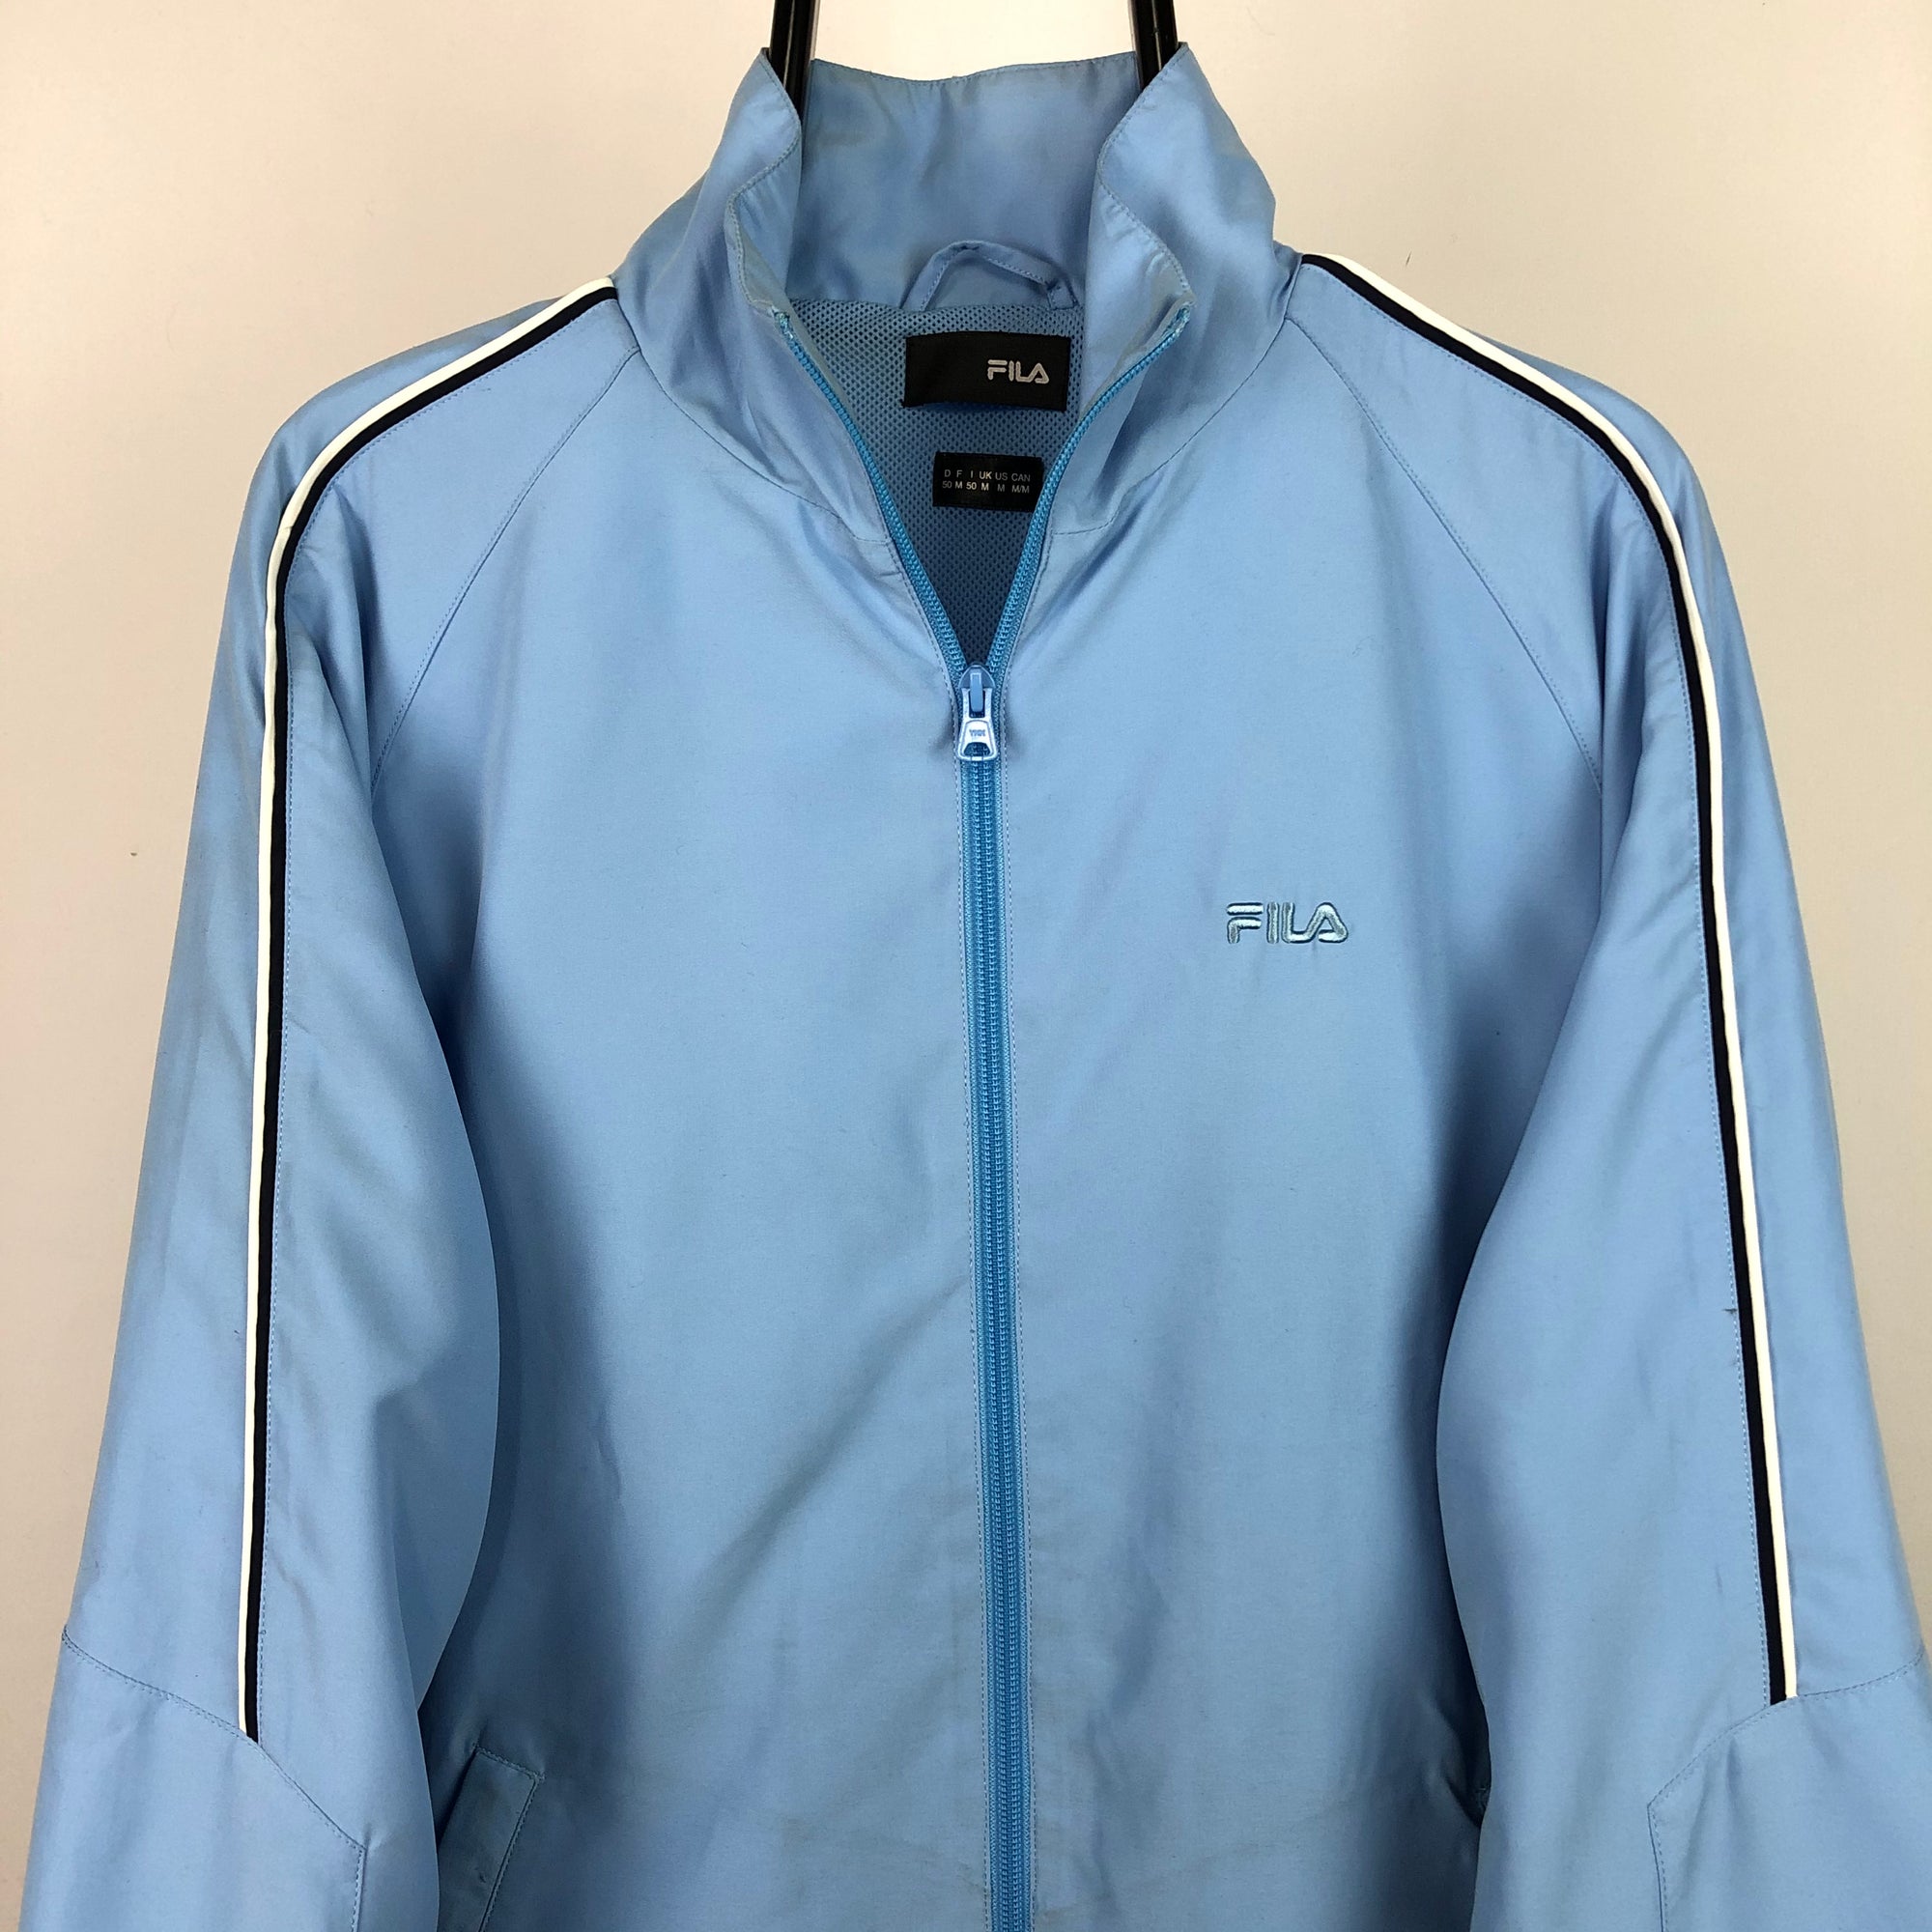 Vintage Fila Track Jacket in Baby Blue - Men's Medium/Women's Large